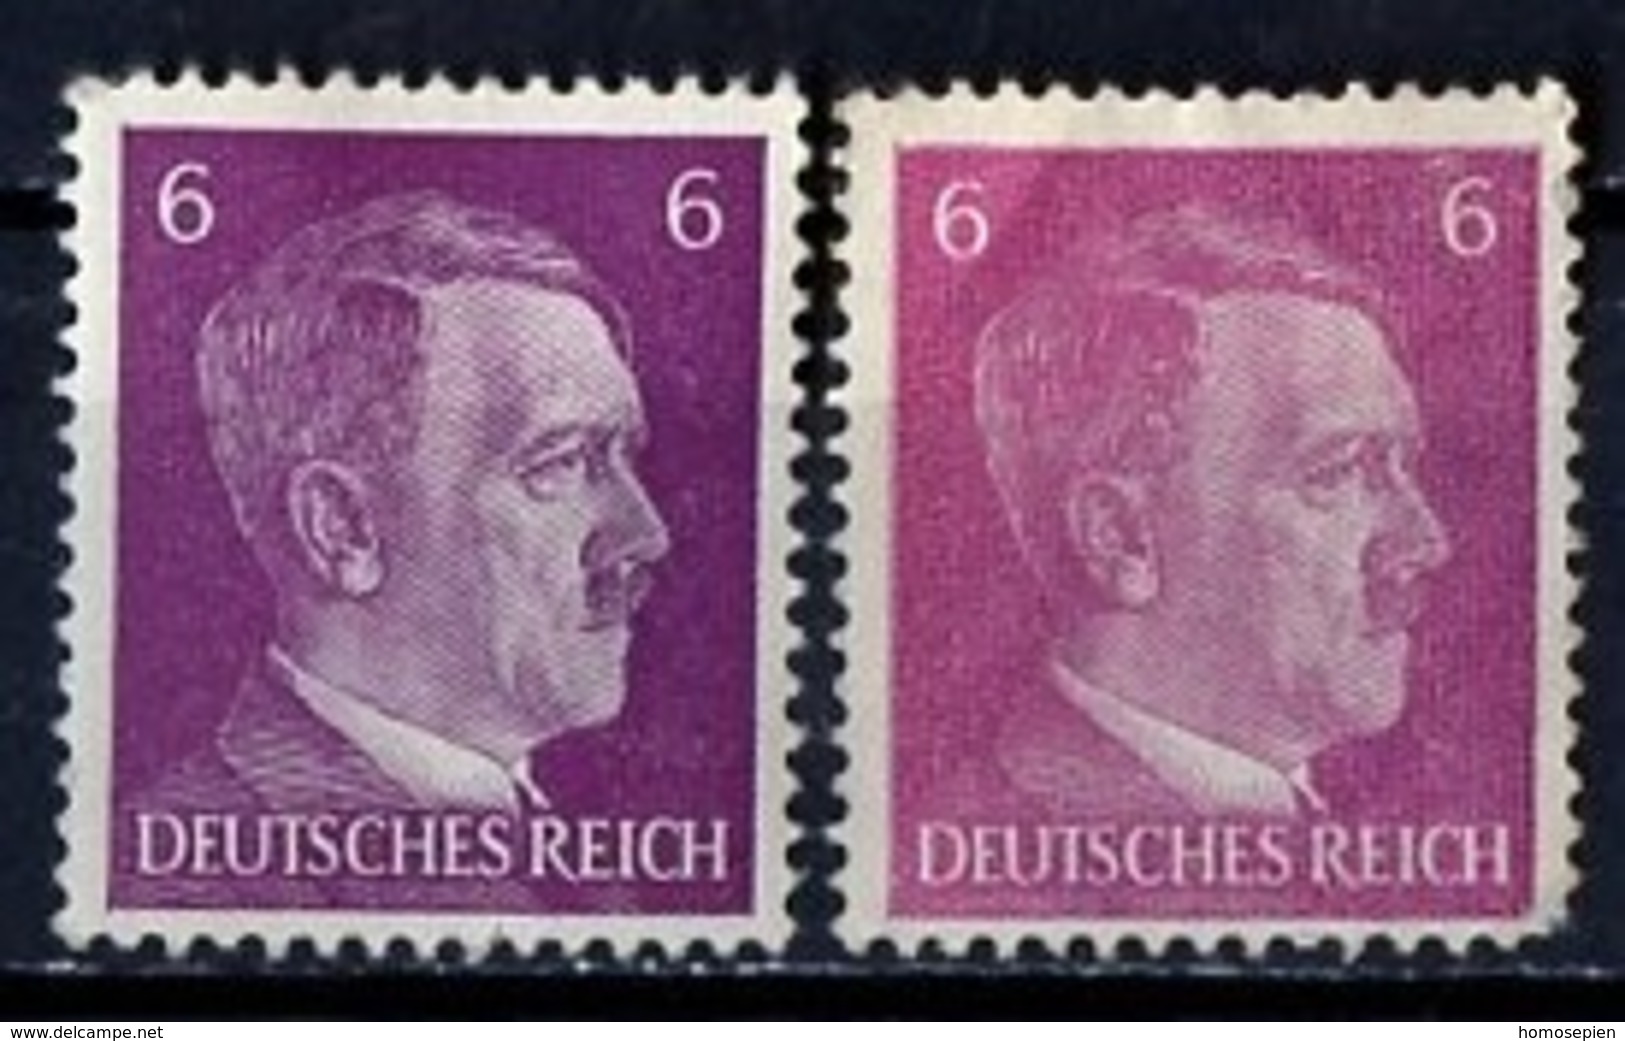 Allemagne III Reich - Germany - Deutschland 1941-43 Y&T N°709 - Michel N°785 * - 6p Hitler - Nuance De Couleur - Neufs